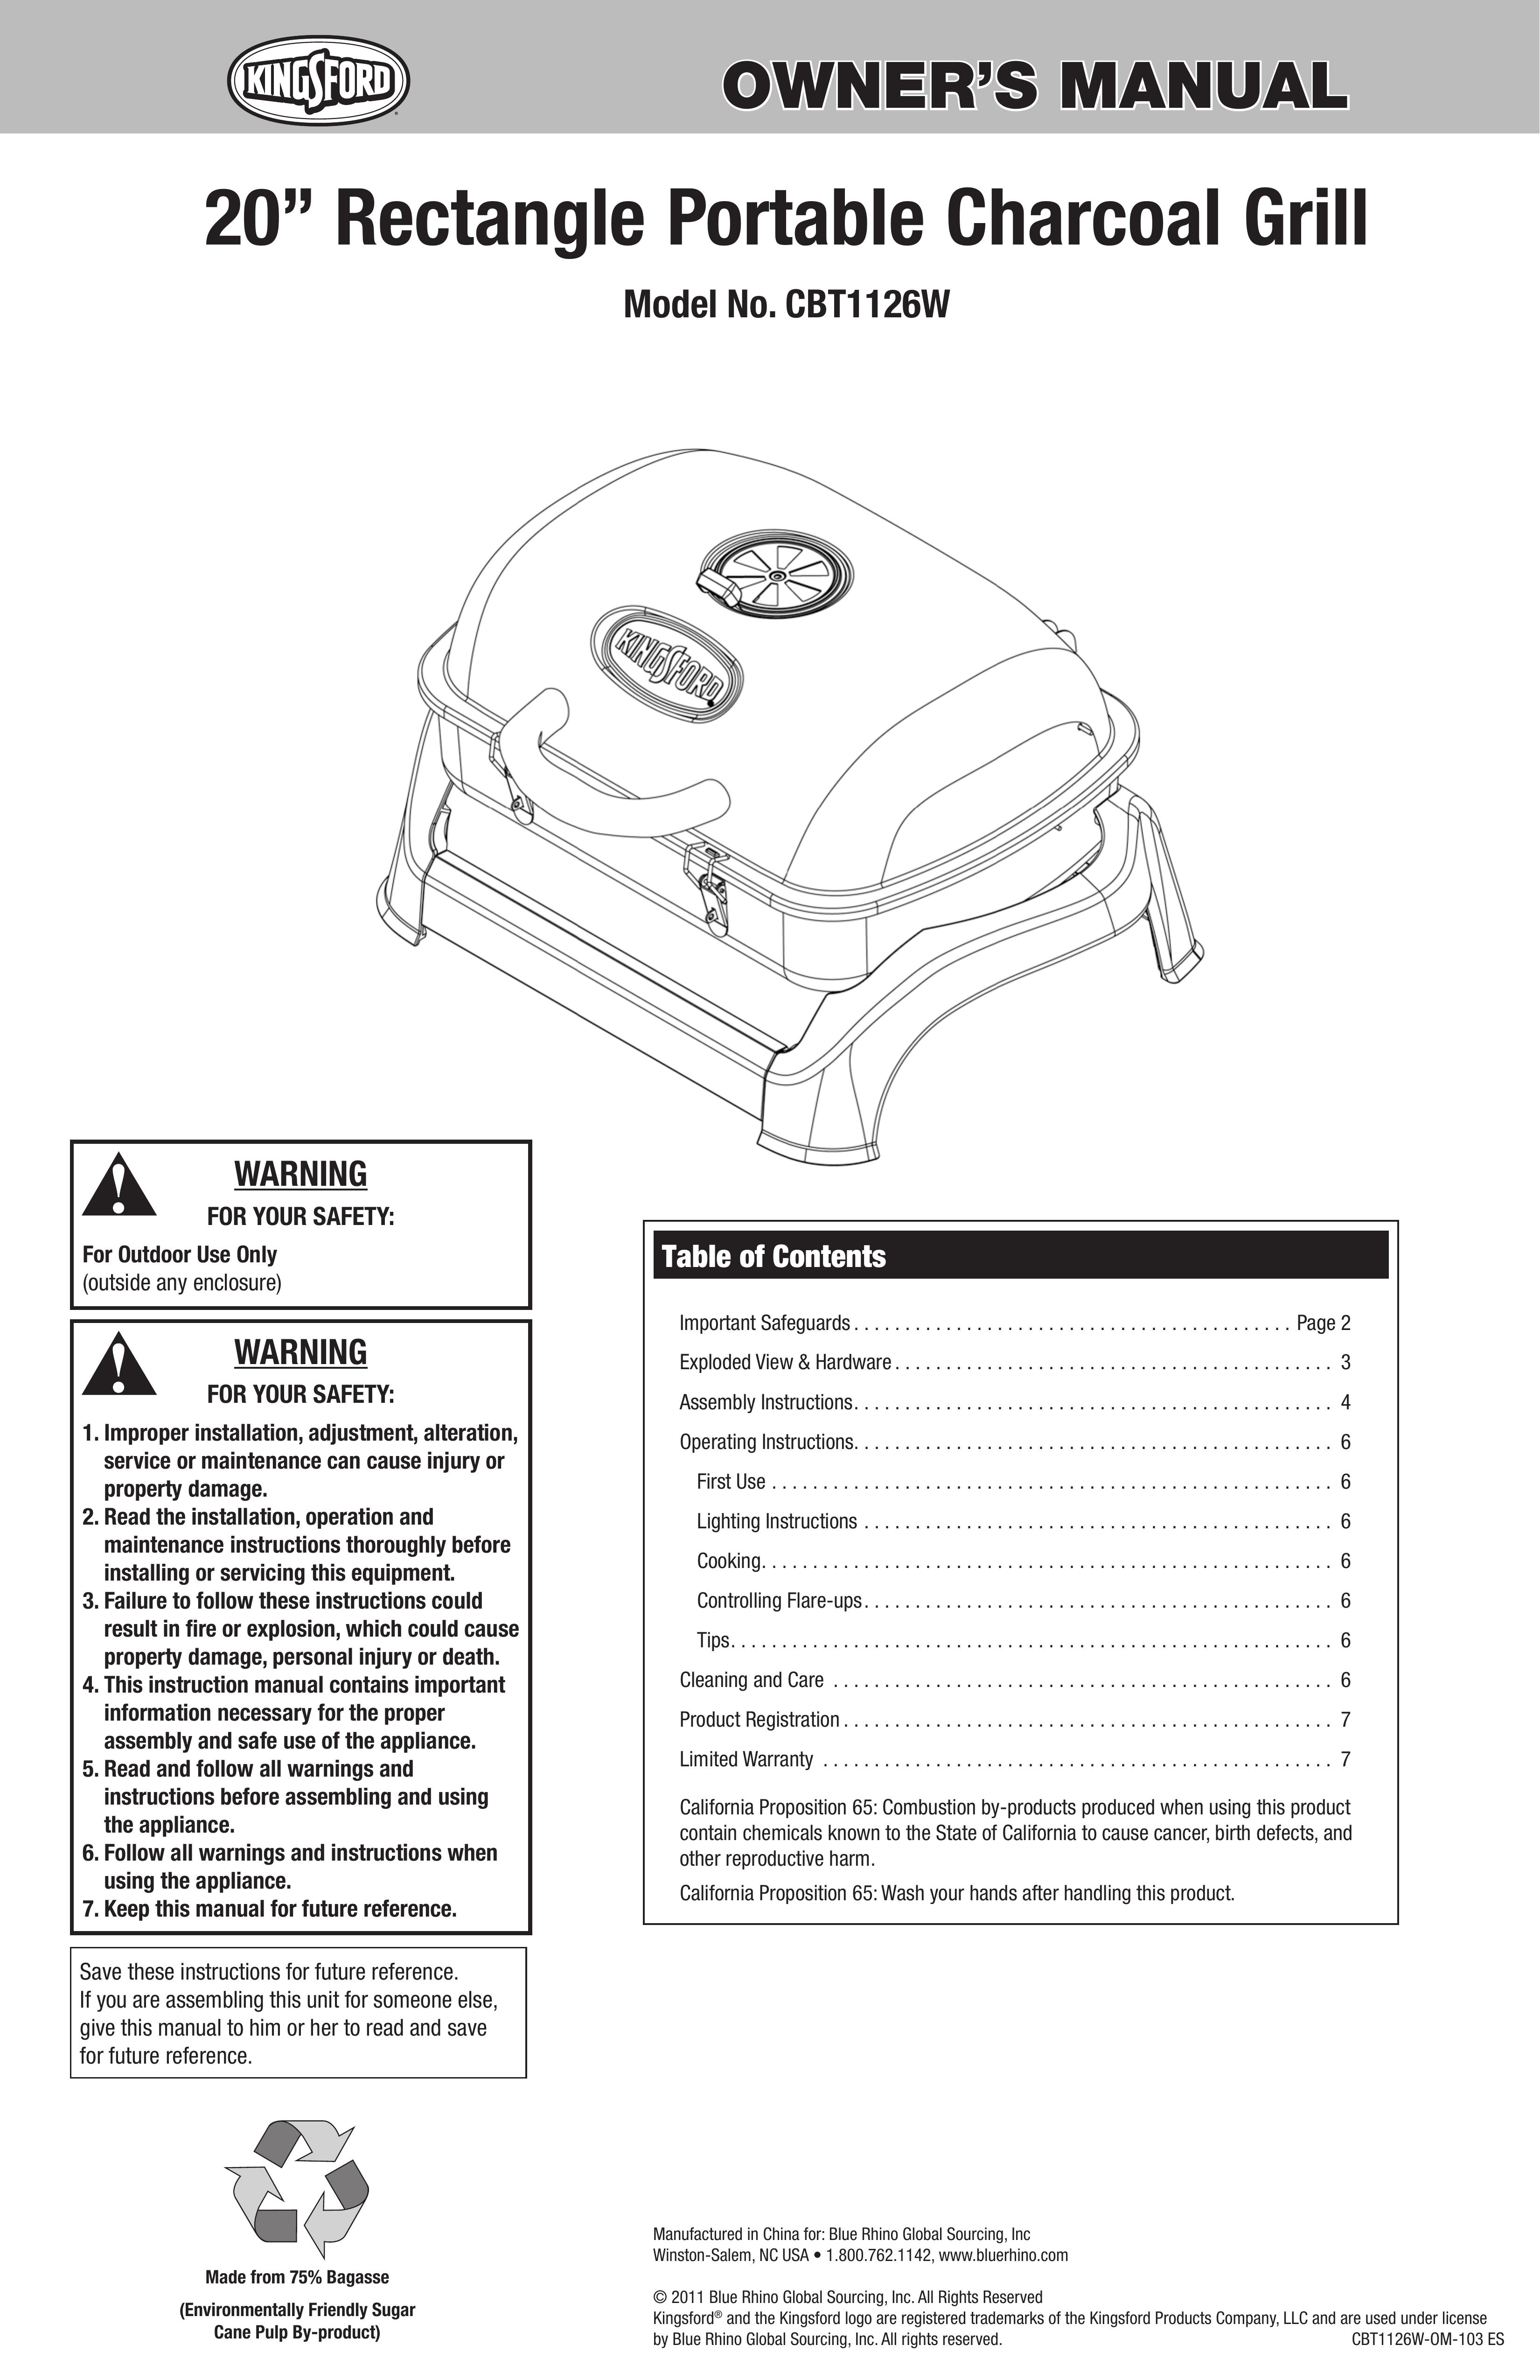 Kingsford CBT1126W Charcoal Grill User Manual